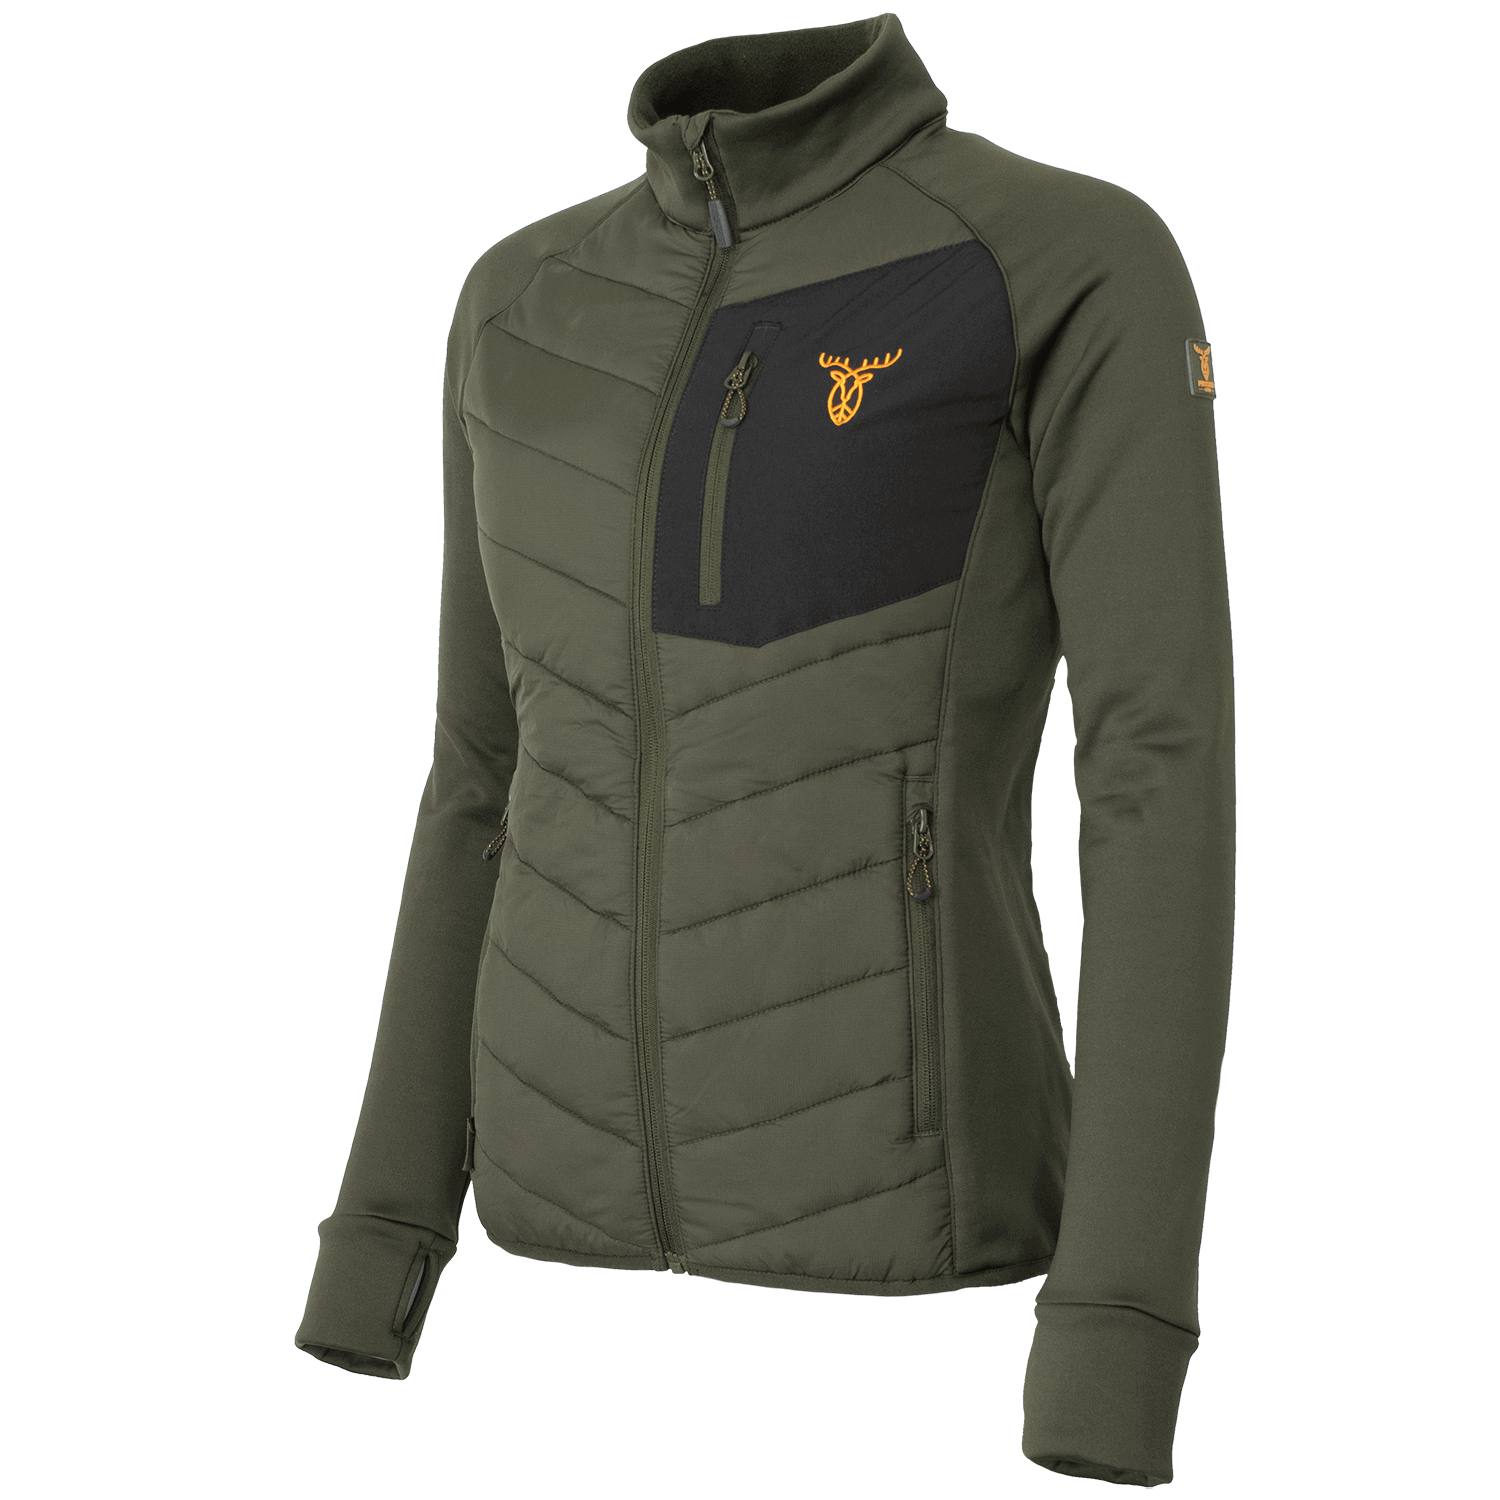 Pirscher Gear Hybrid Fleece Ladies Jacket - Gifts For Hunters